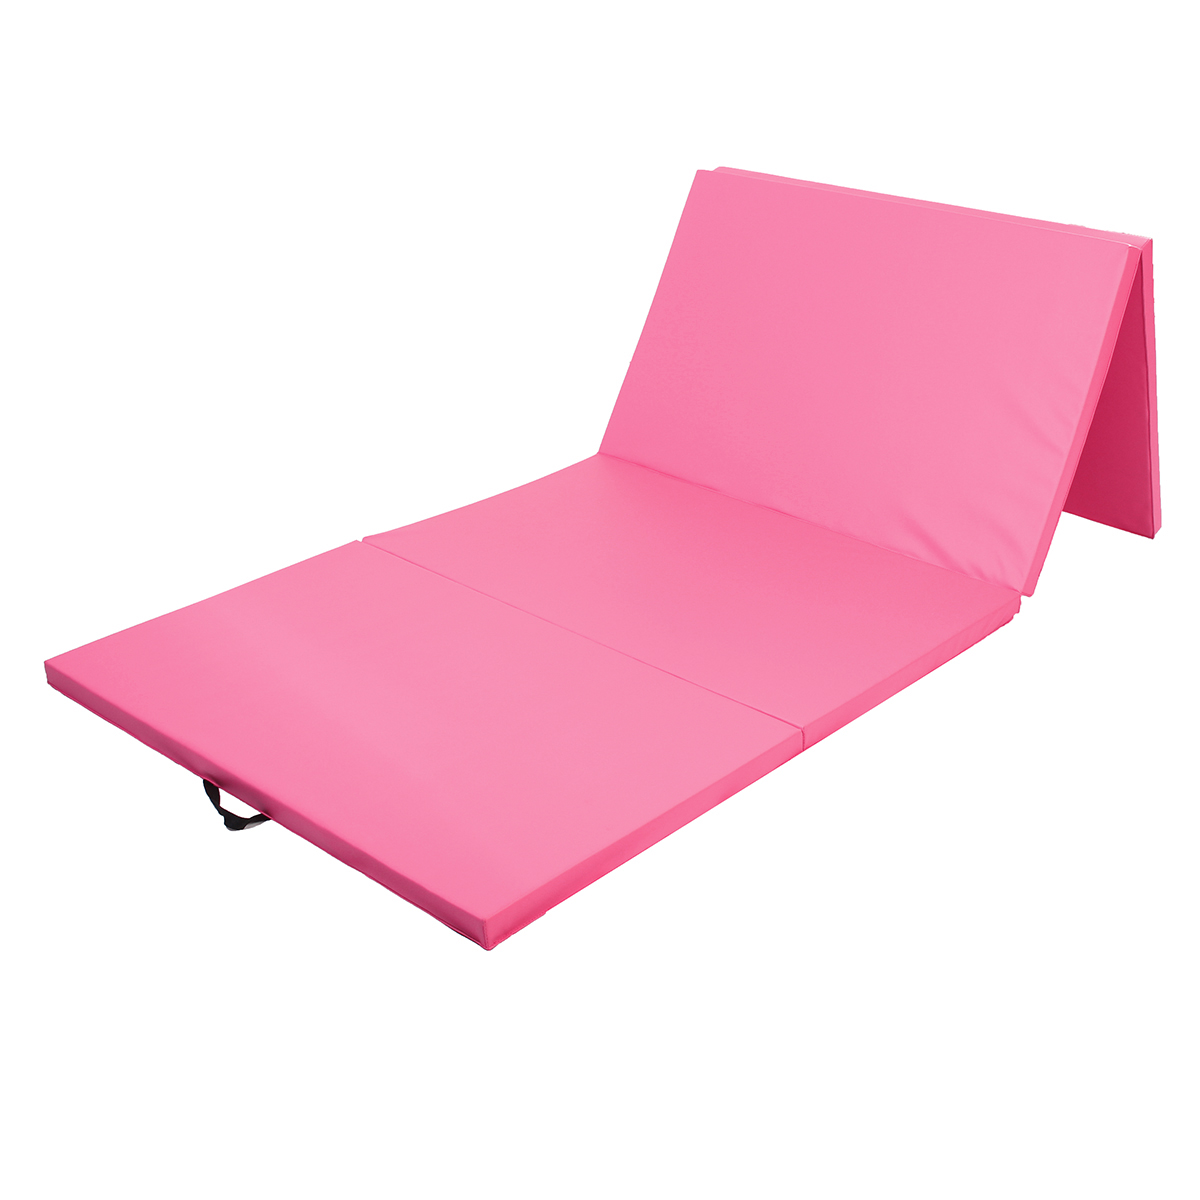 118x47x196inch-4-Folding-Super-Large-Gymnastics-Mat-Yoga-Gym-Exercise-Pad-Pink-1246274-4